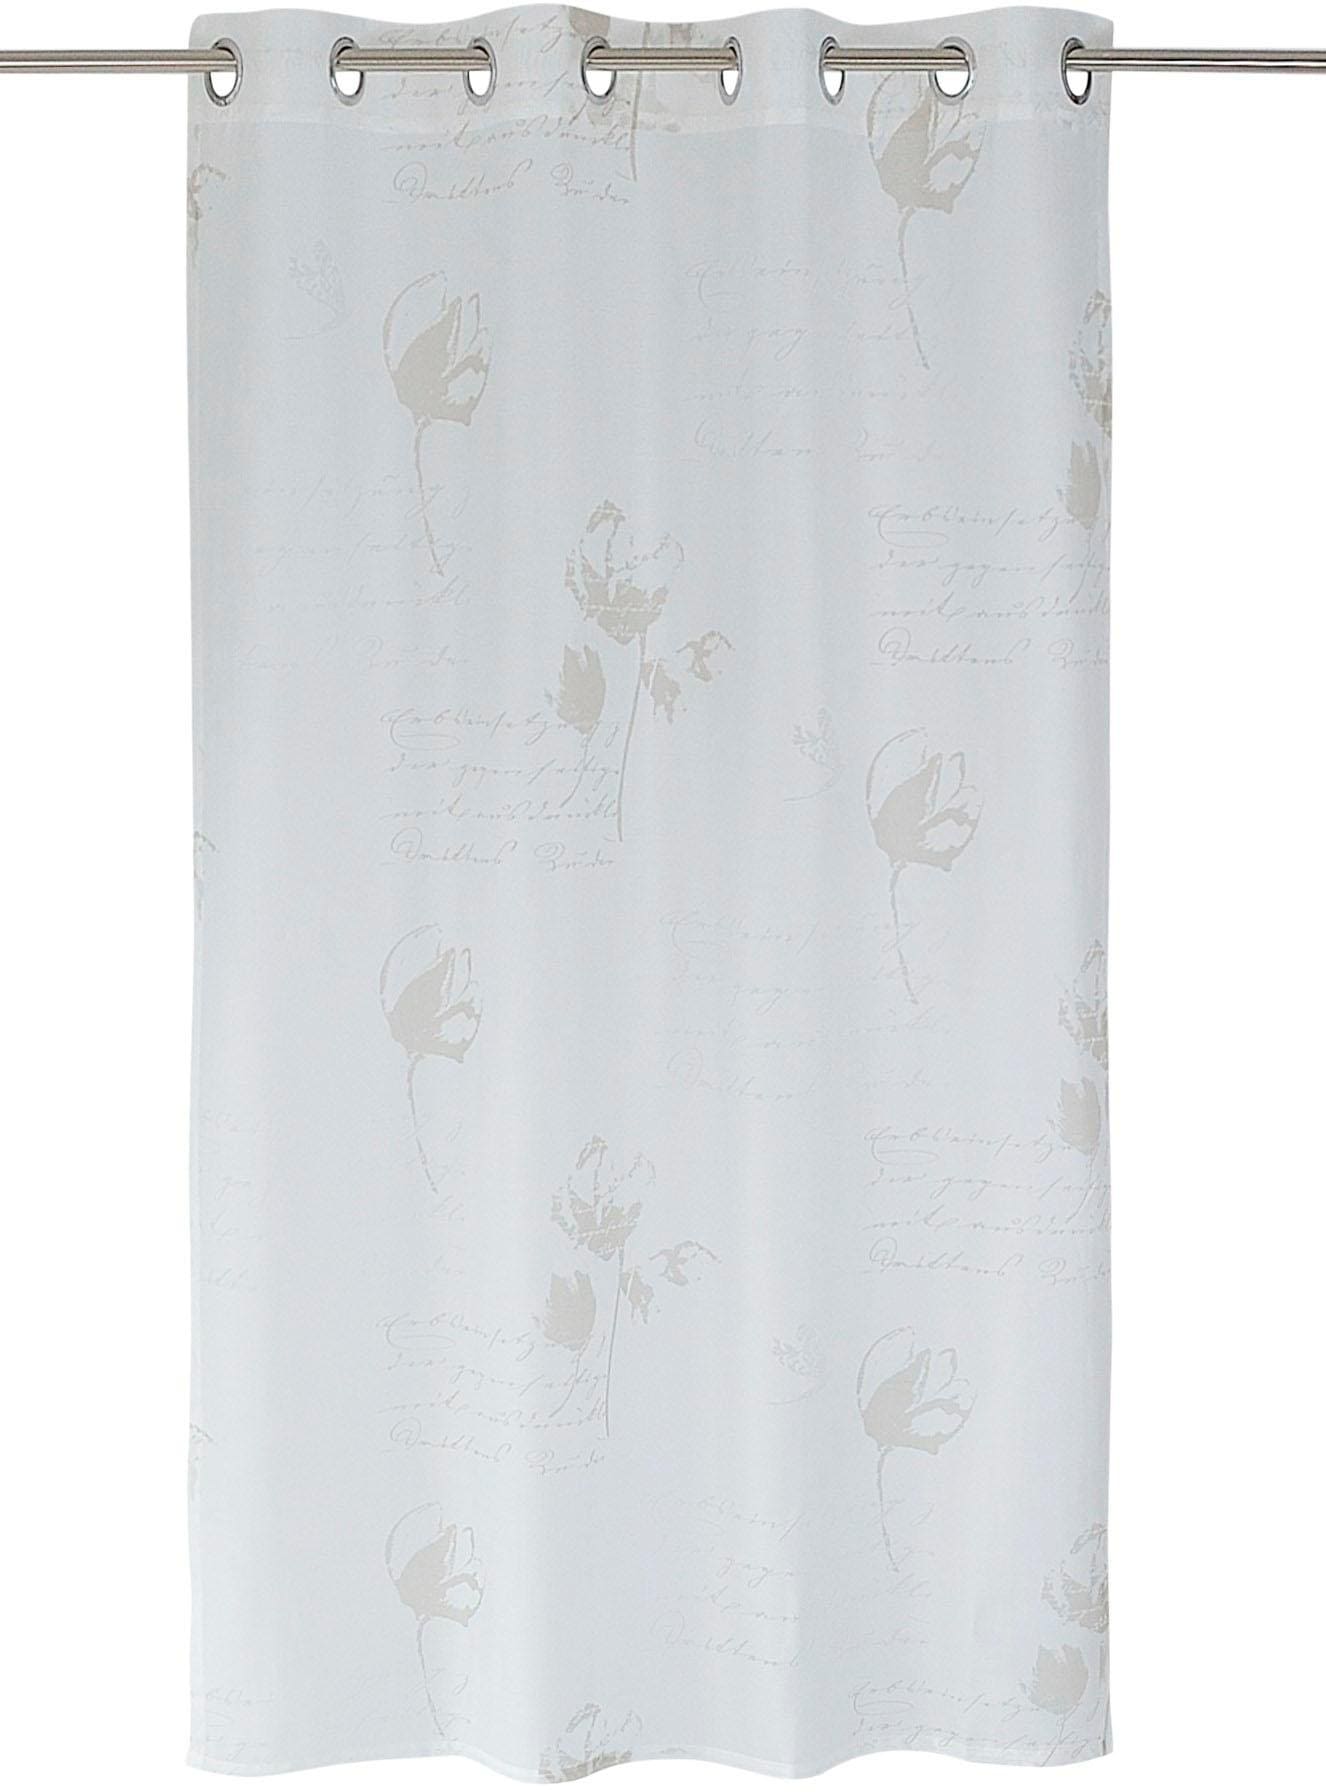 Kutti Vorhang »Nizza«, (1 St.), halbtransparent, Ausbrenner, Gardine, offwhite, floral bedruckt